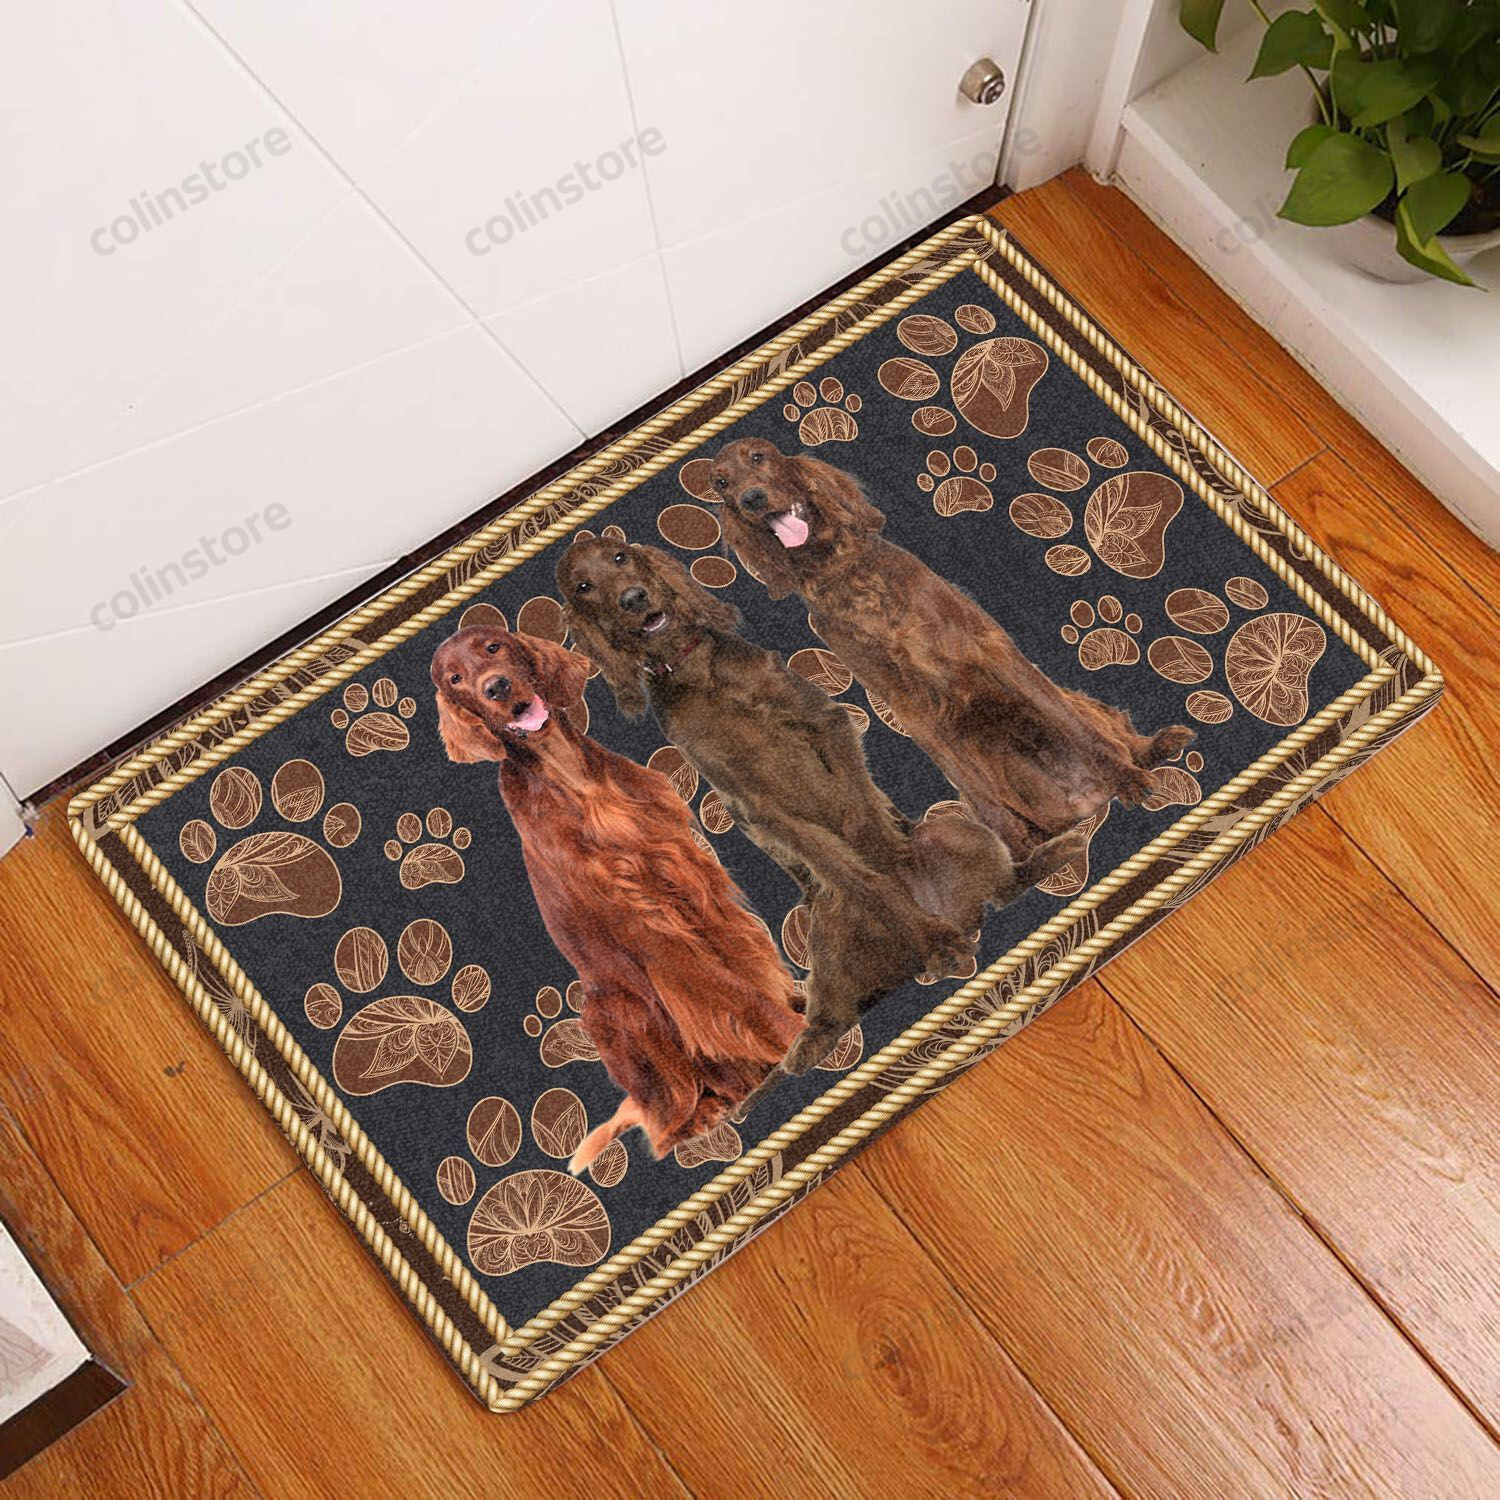 Irish Setter Floral Paw - Dog Doormat Welcome Mat